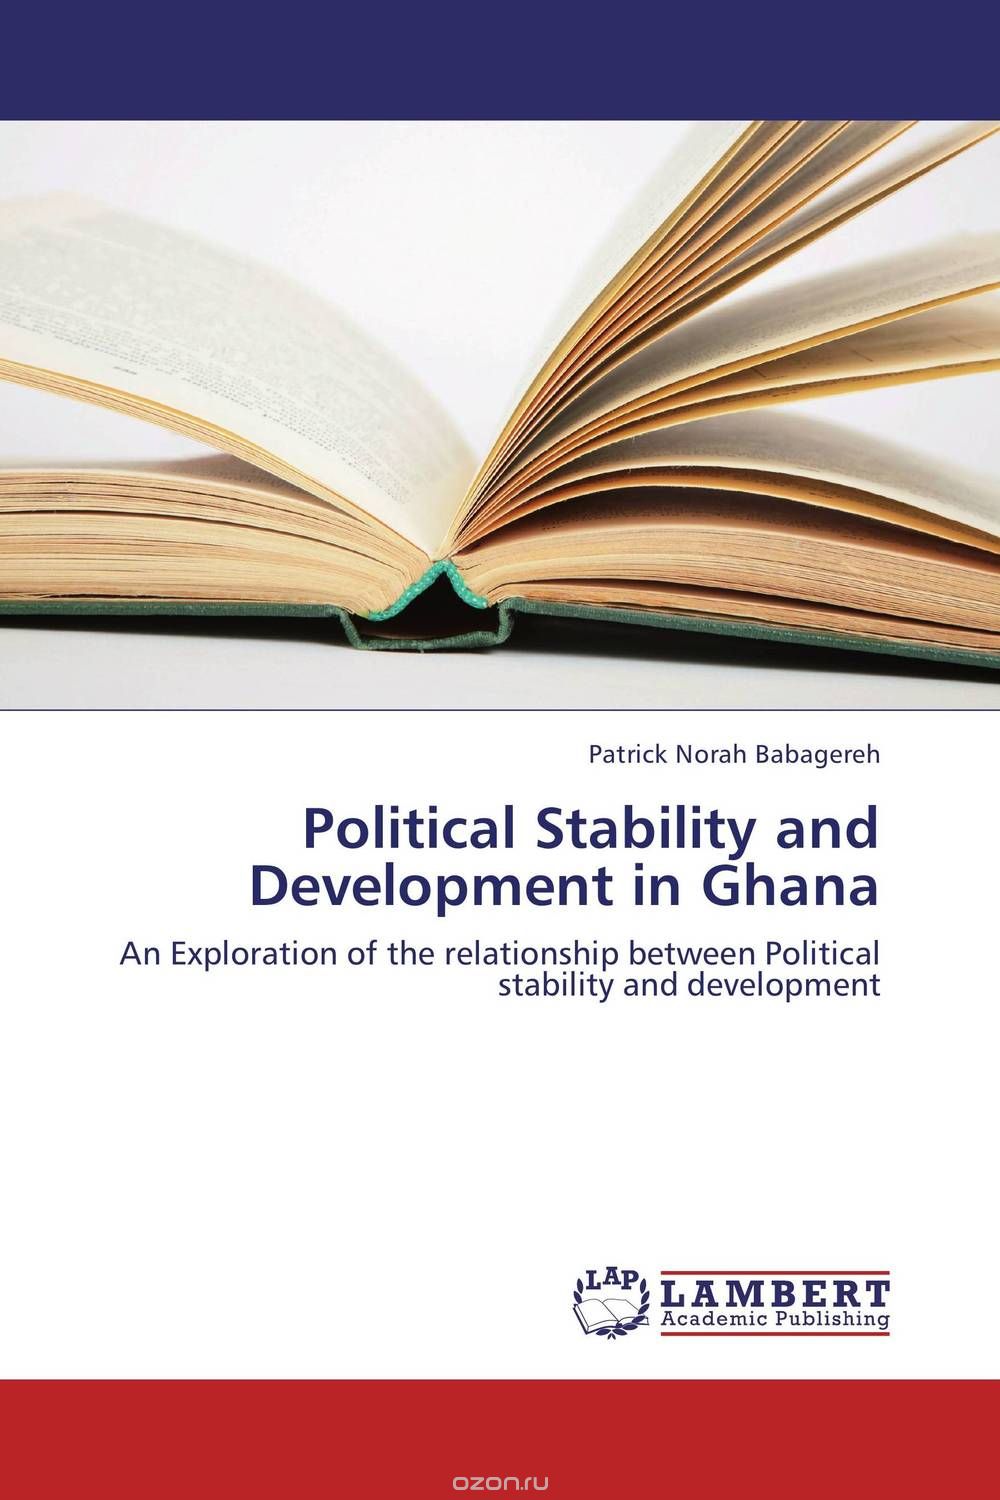 Скачать книгу "Political Stability and Development in Ghana"